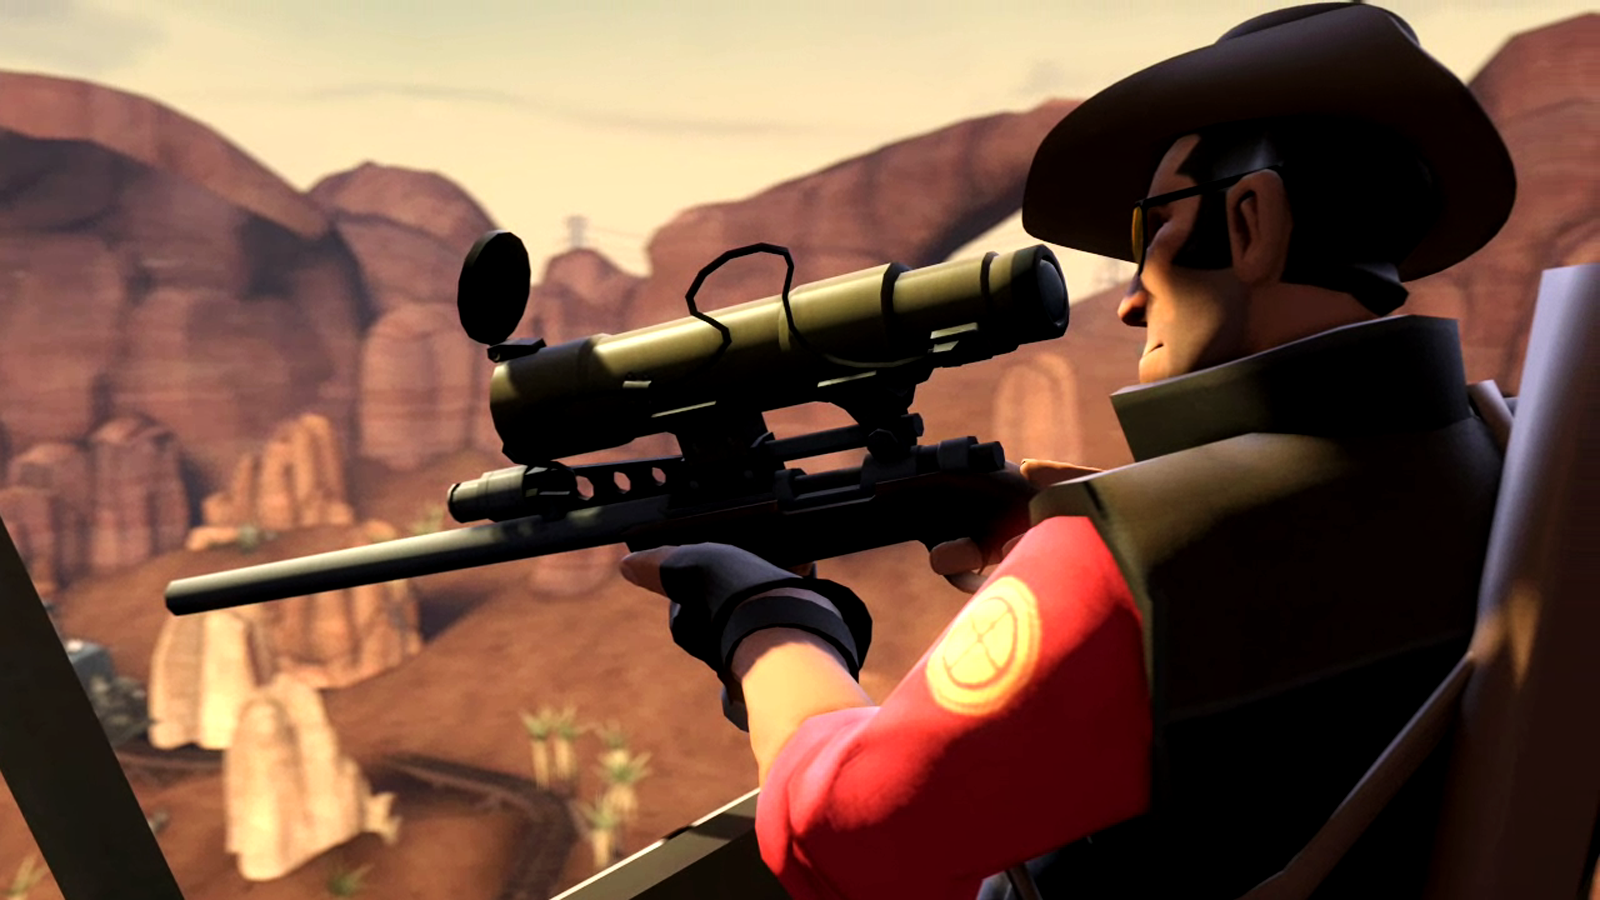 15 Best Sniper Wallpapers from Video Gameswallpapers screensavers